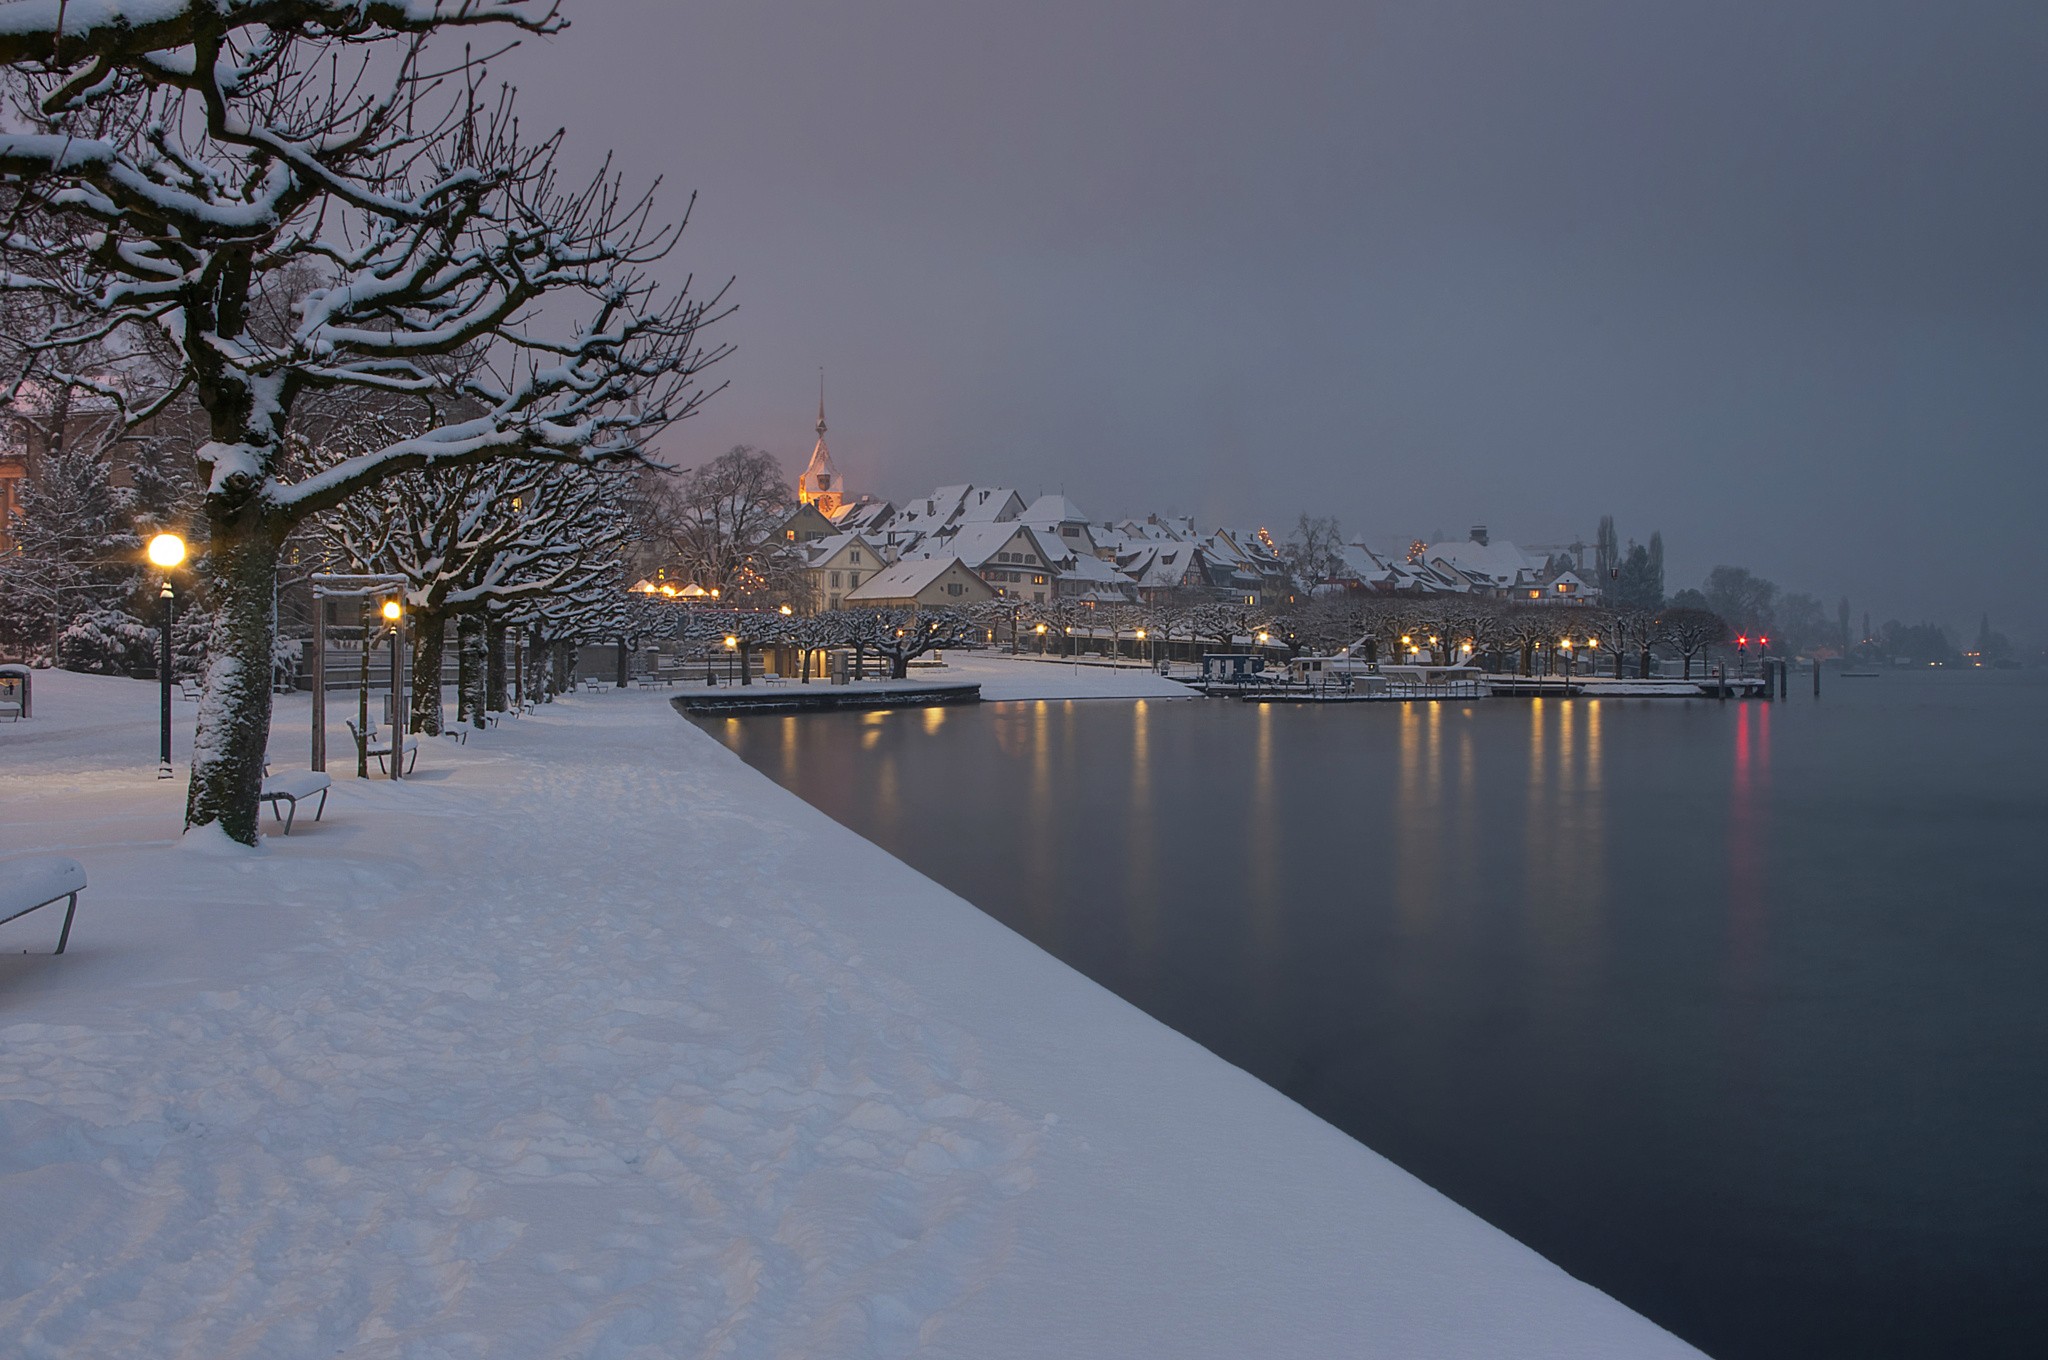 General 2048x1360 winter town city lights riverside calm idyllic cold outdoors